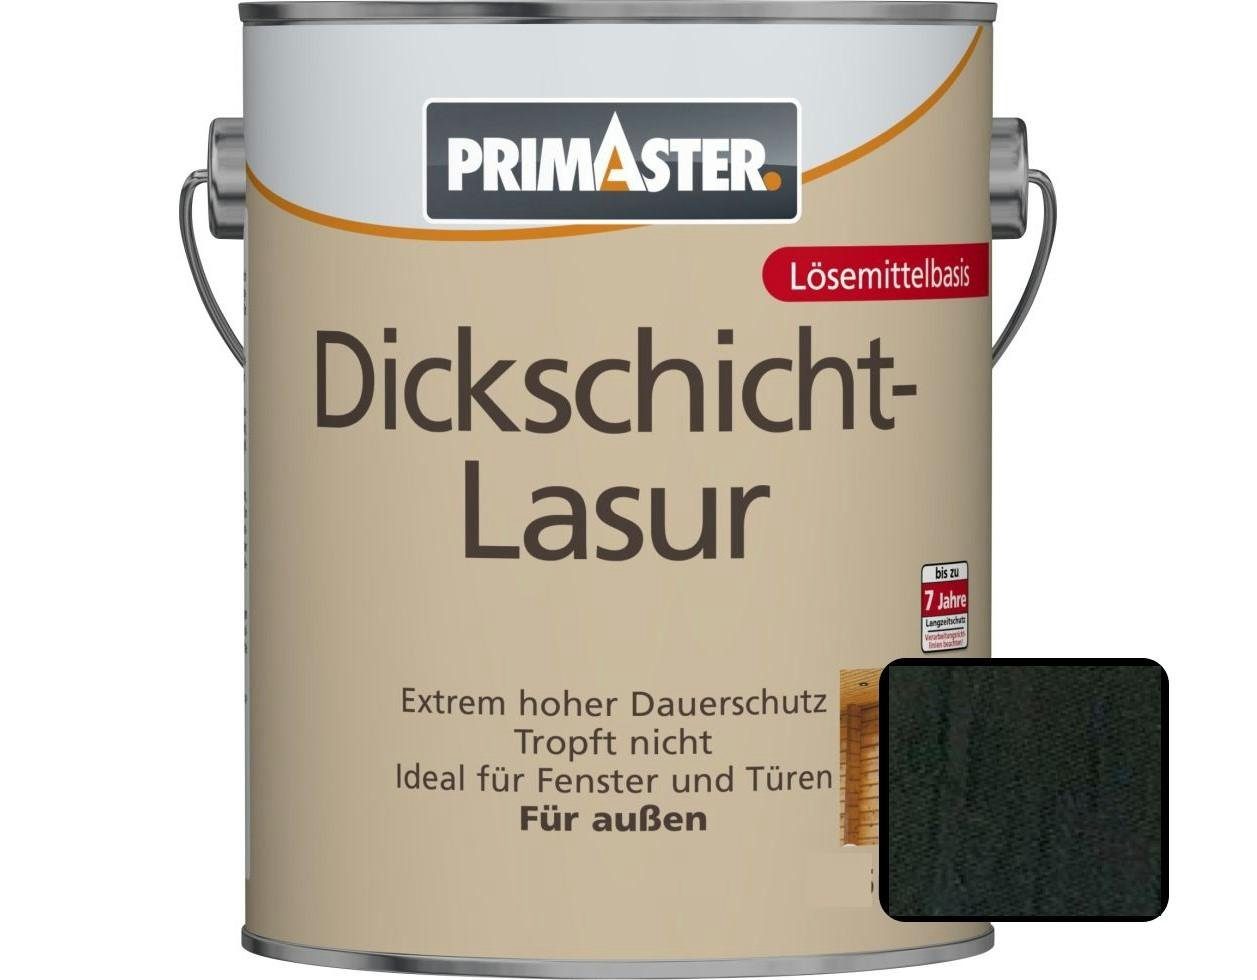 ebenholz Lasur L Dickschichtlasur Primaster 2,5 Primaster